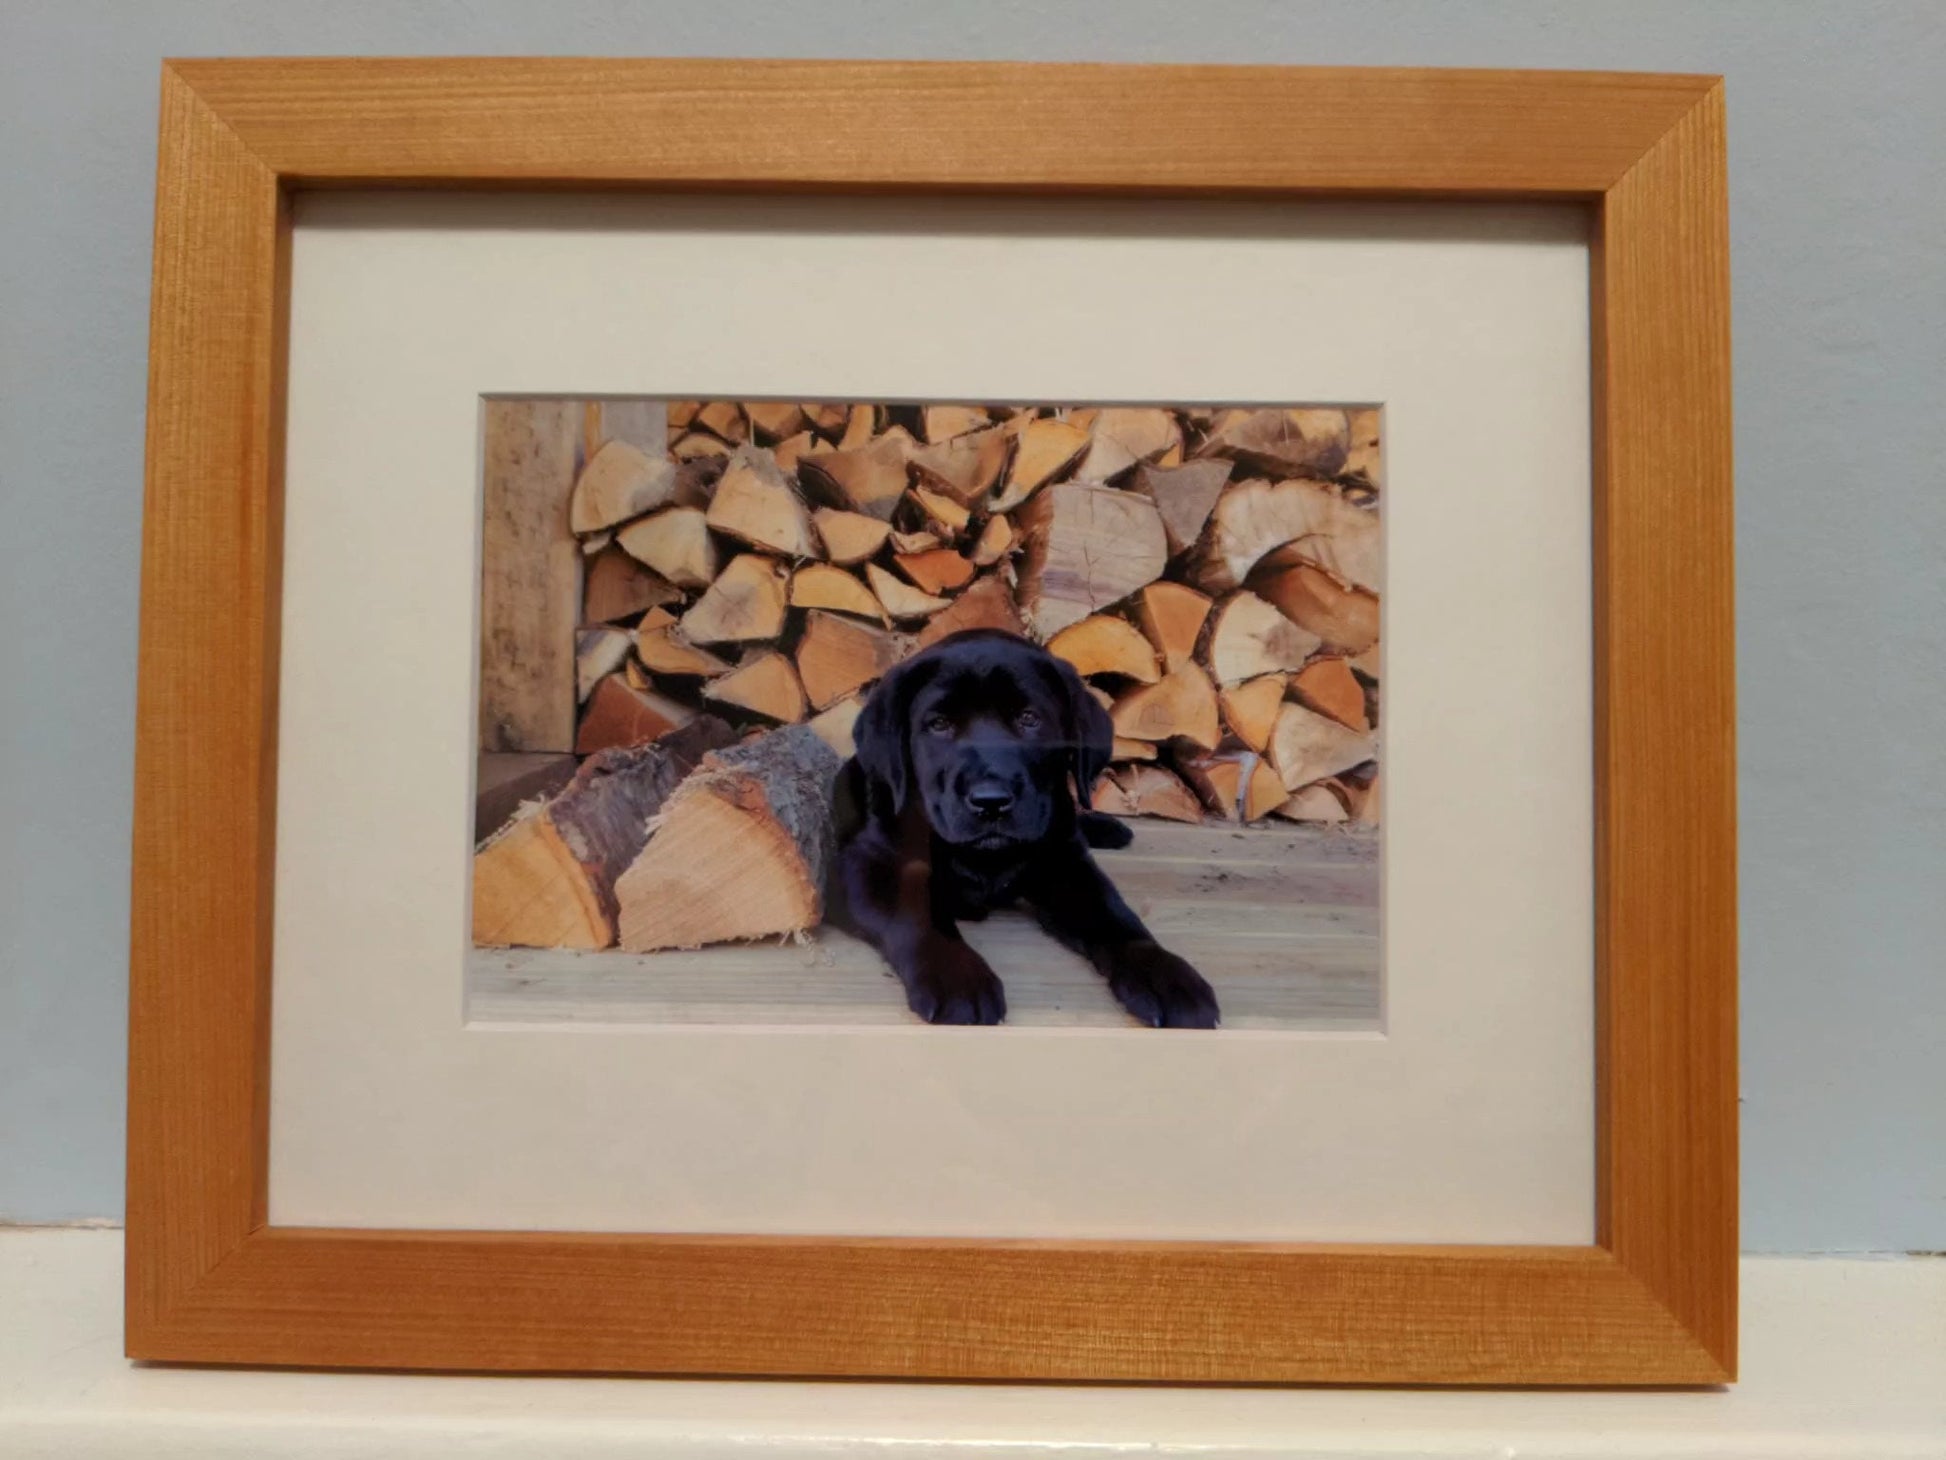 Hickory Hardwood Gallery Frame - Minimalist Profile - Picture Frame | Natural Wood Frame